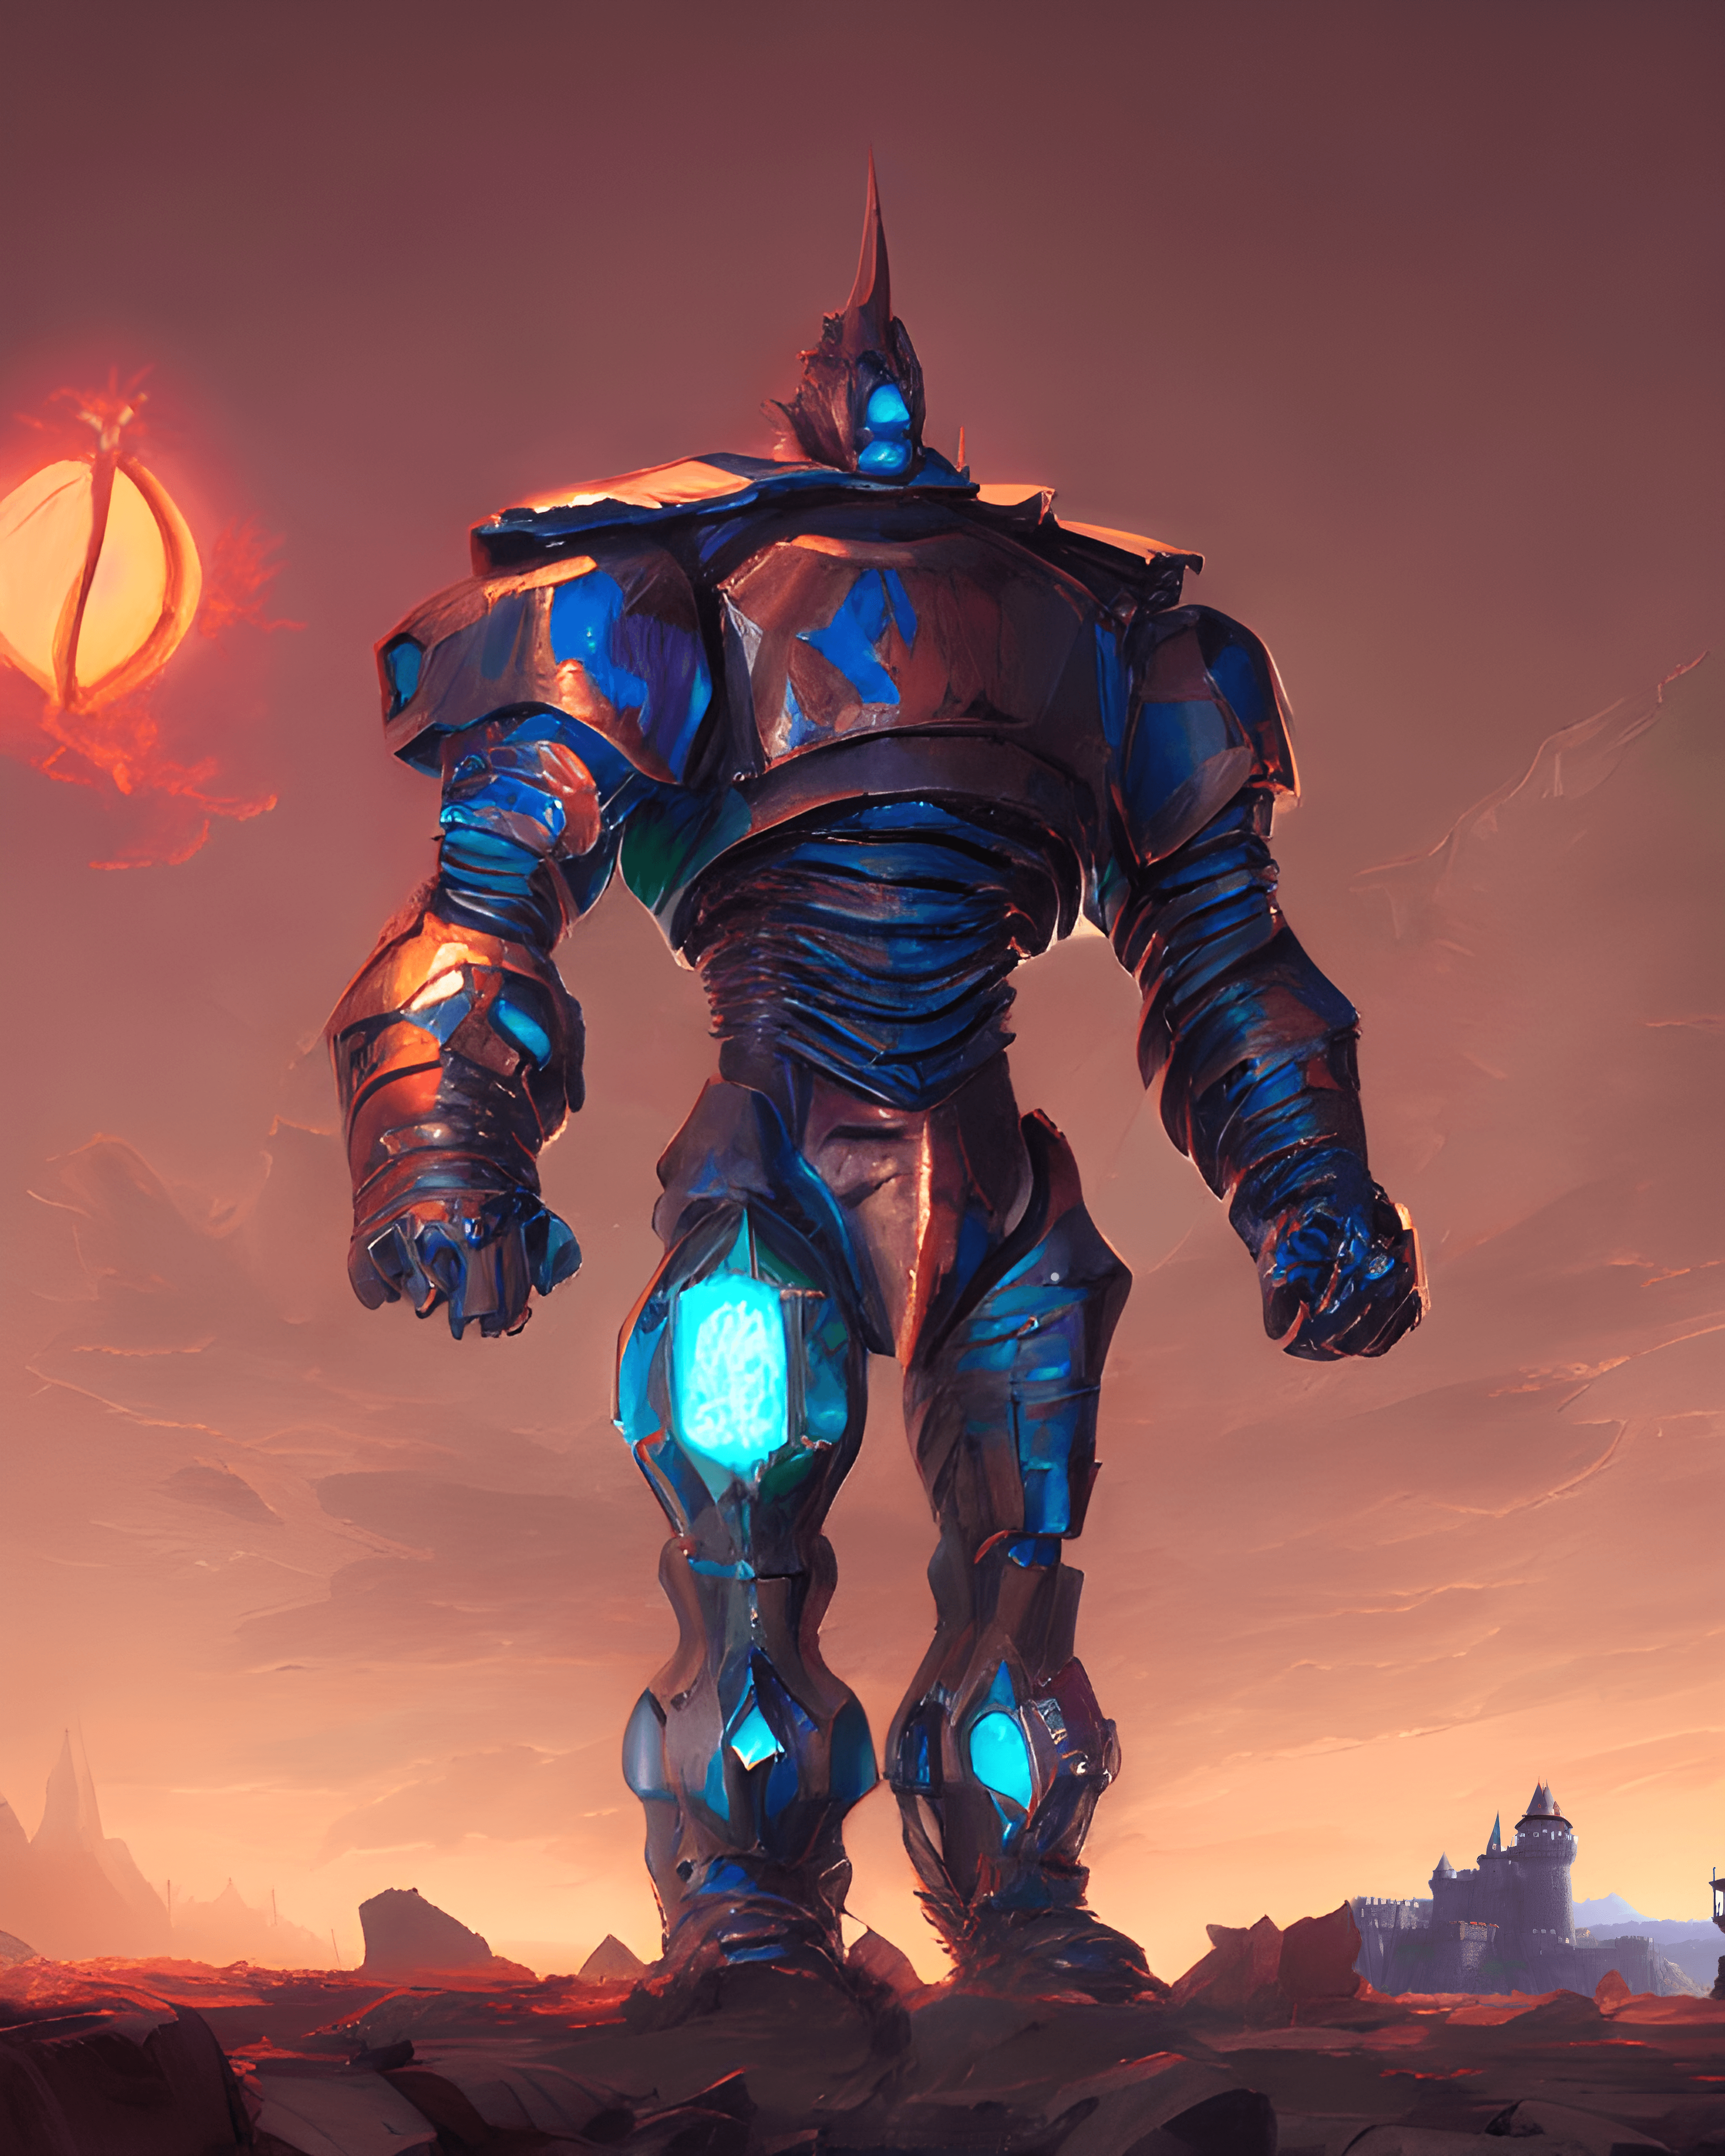 Titan Class Golem: Behemoth